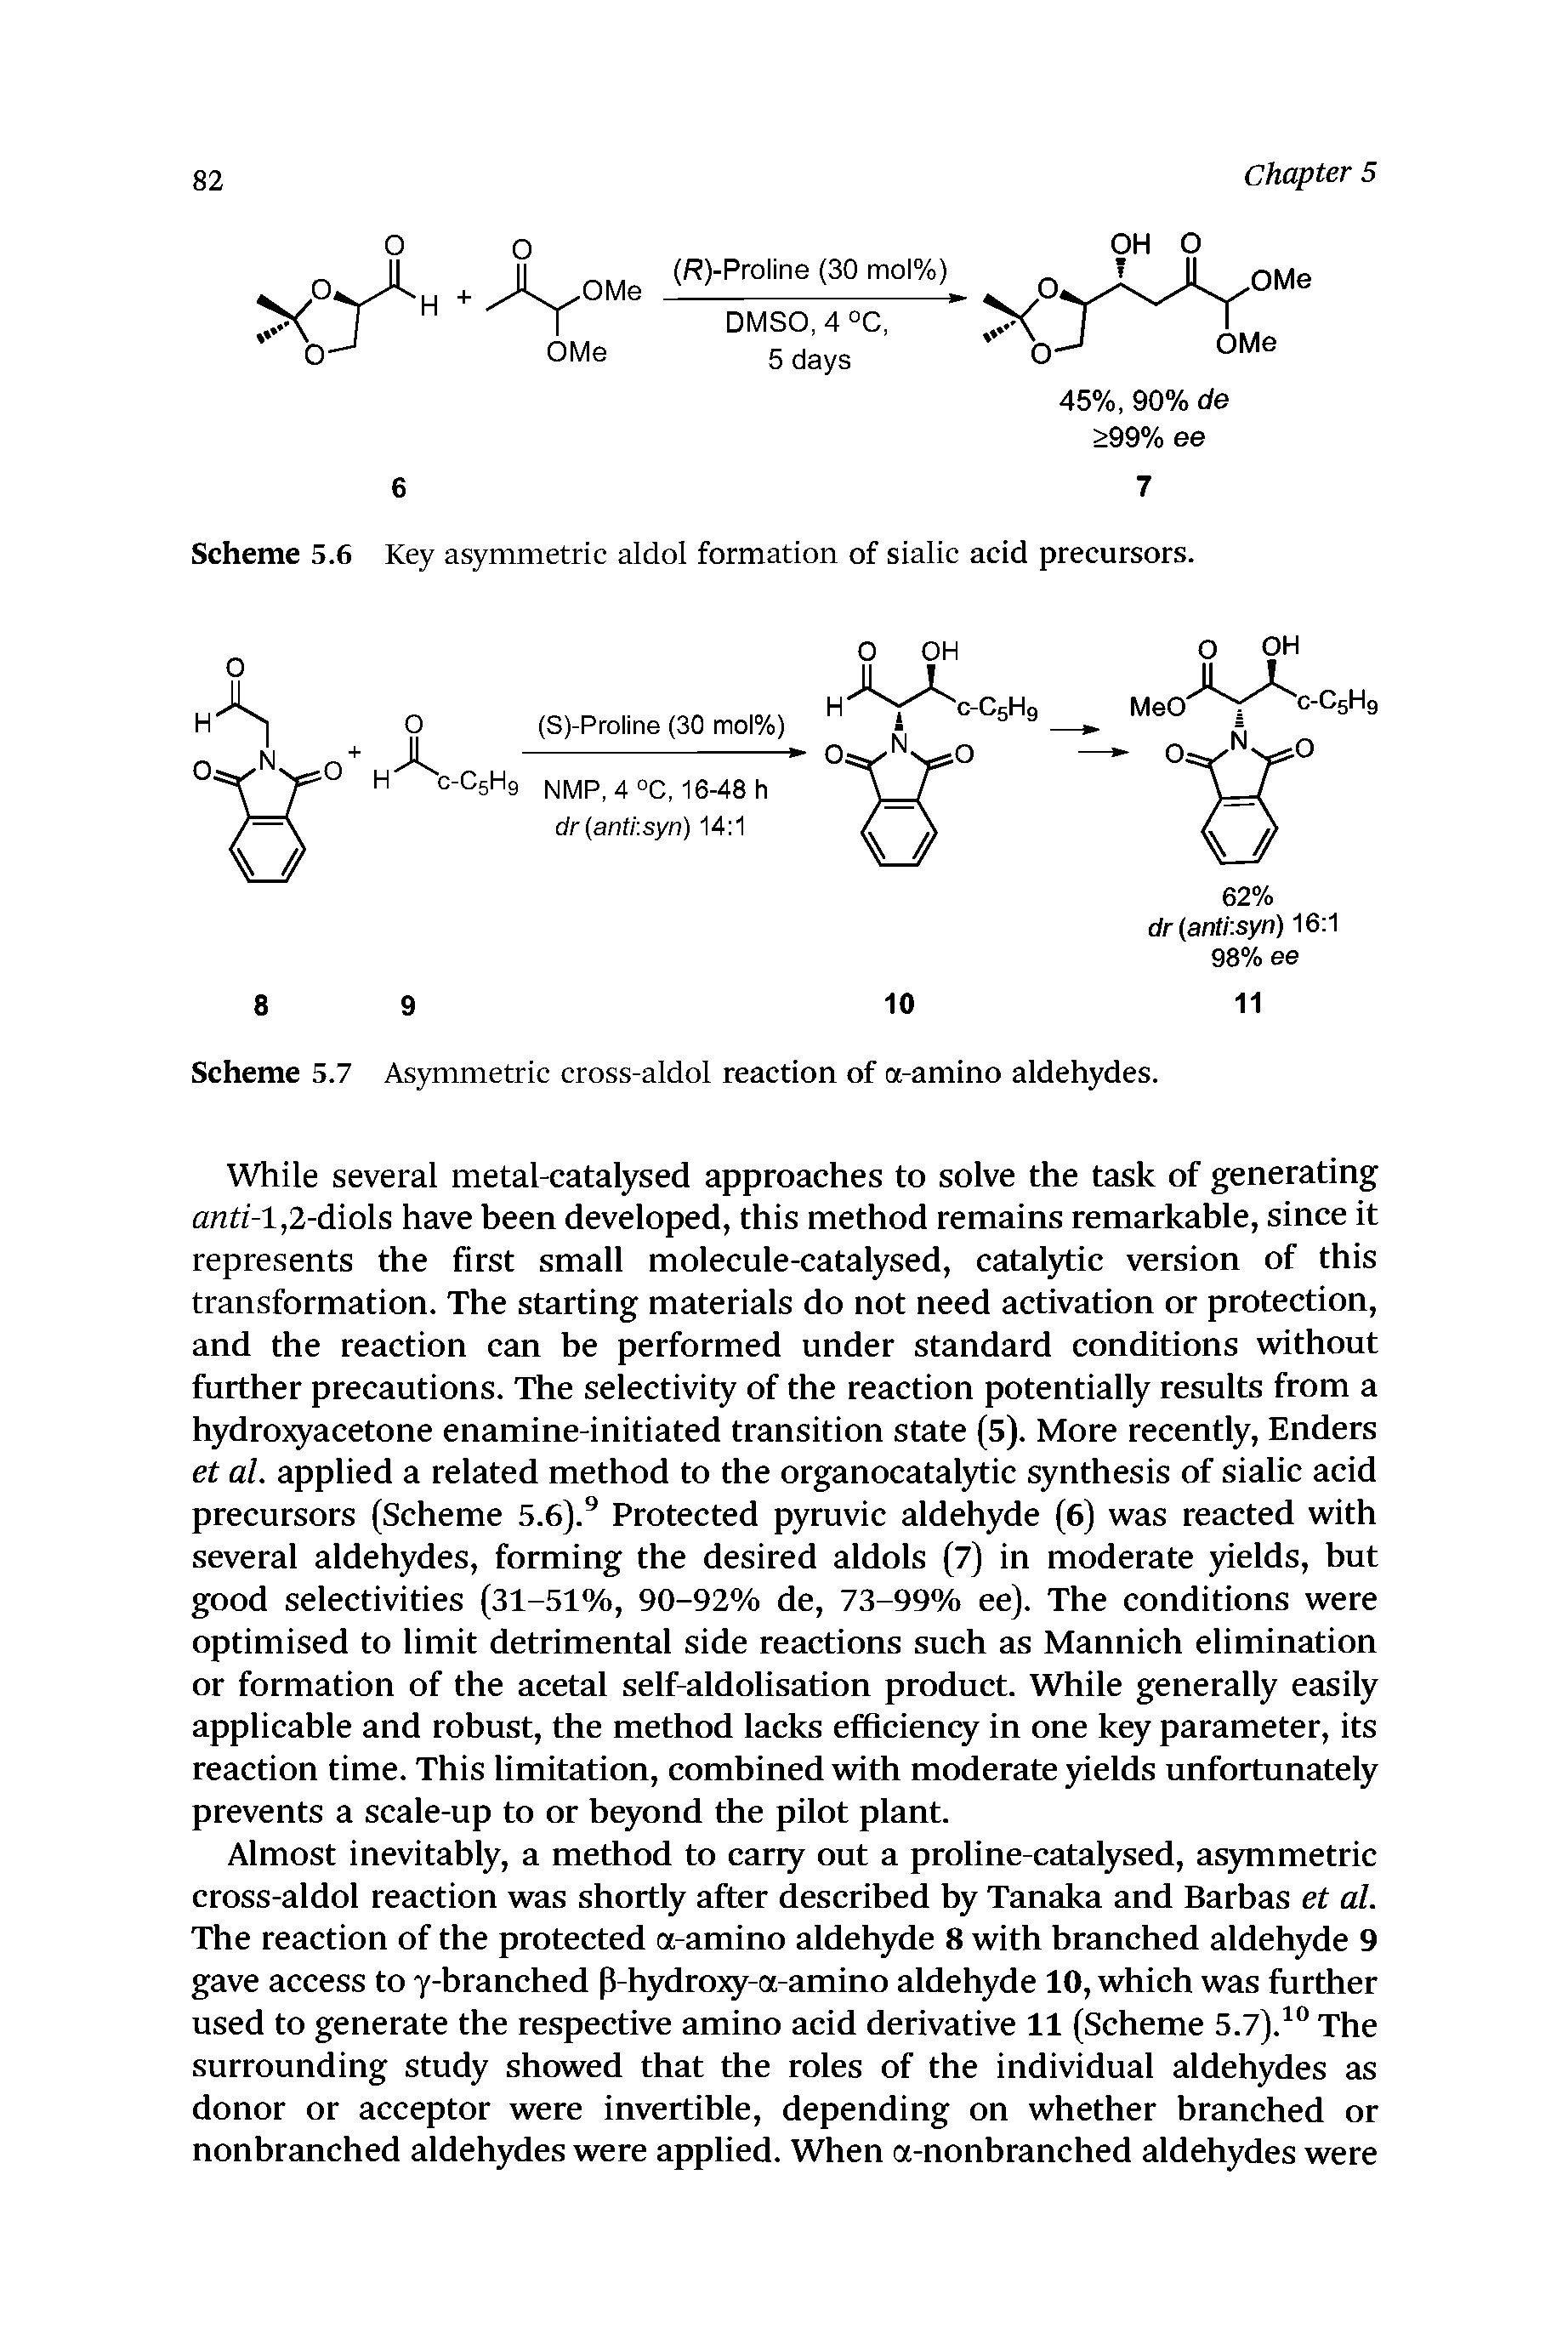 Scheme 5.7 Asymmetric cross-aldol reaction of a-amino aldehydes.